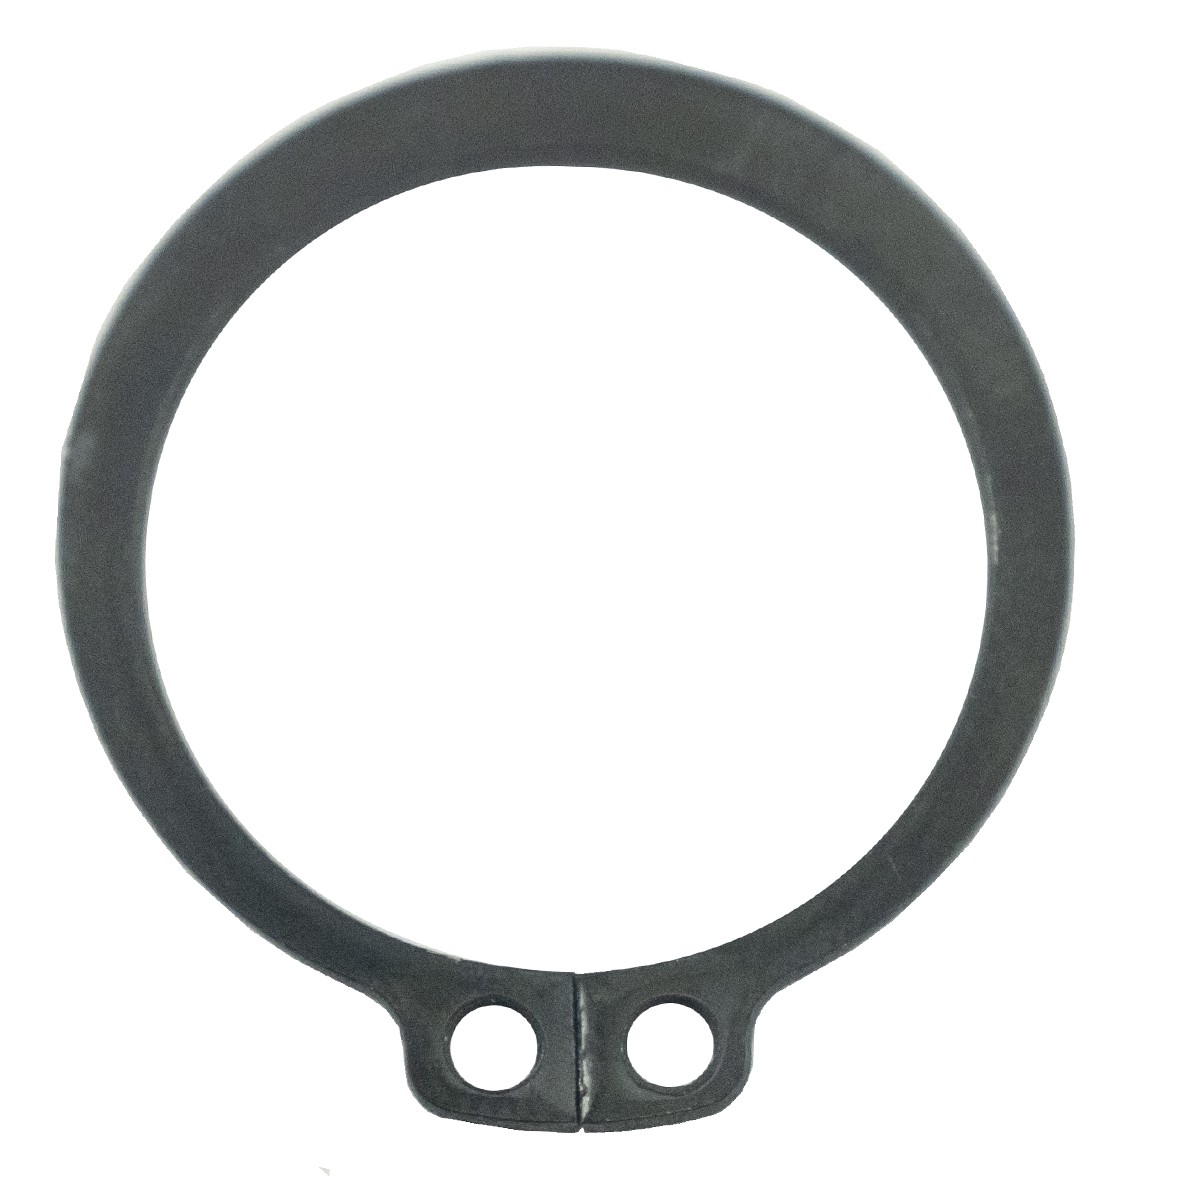 Snap ring Ø 25 mm / LS XJ25 / LS MT1.25 / LS MT3.35 / LS MT3.40 / LS MT3.50 / LS MT3.60 / S810025001 / 40029271